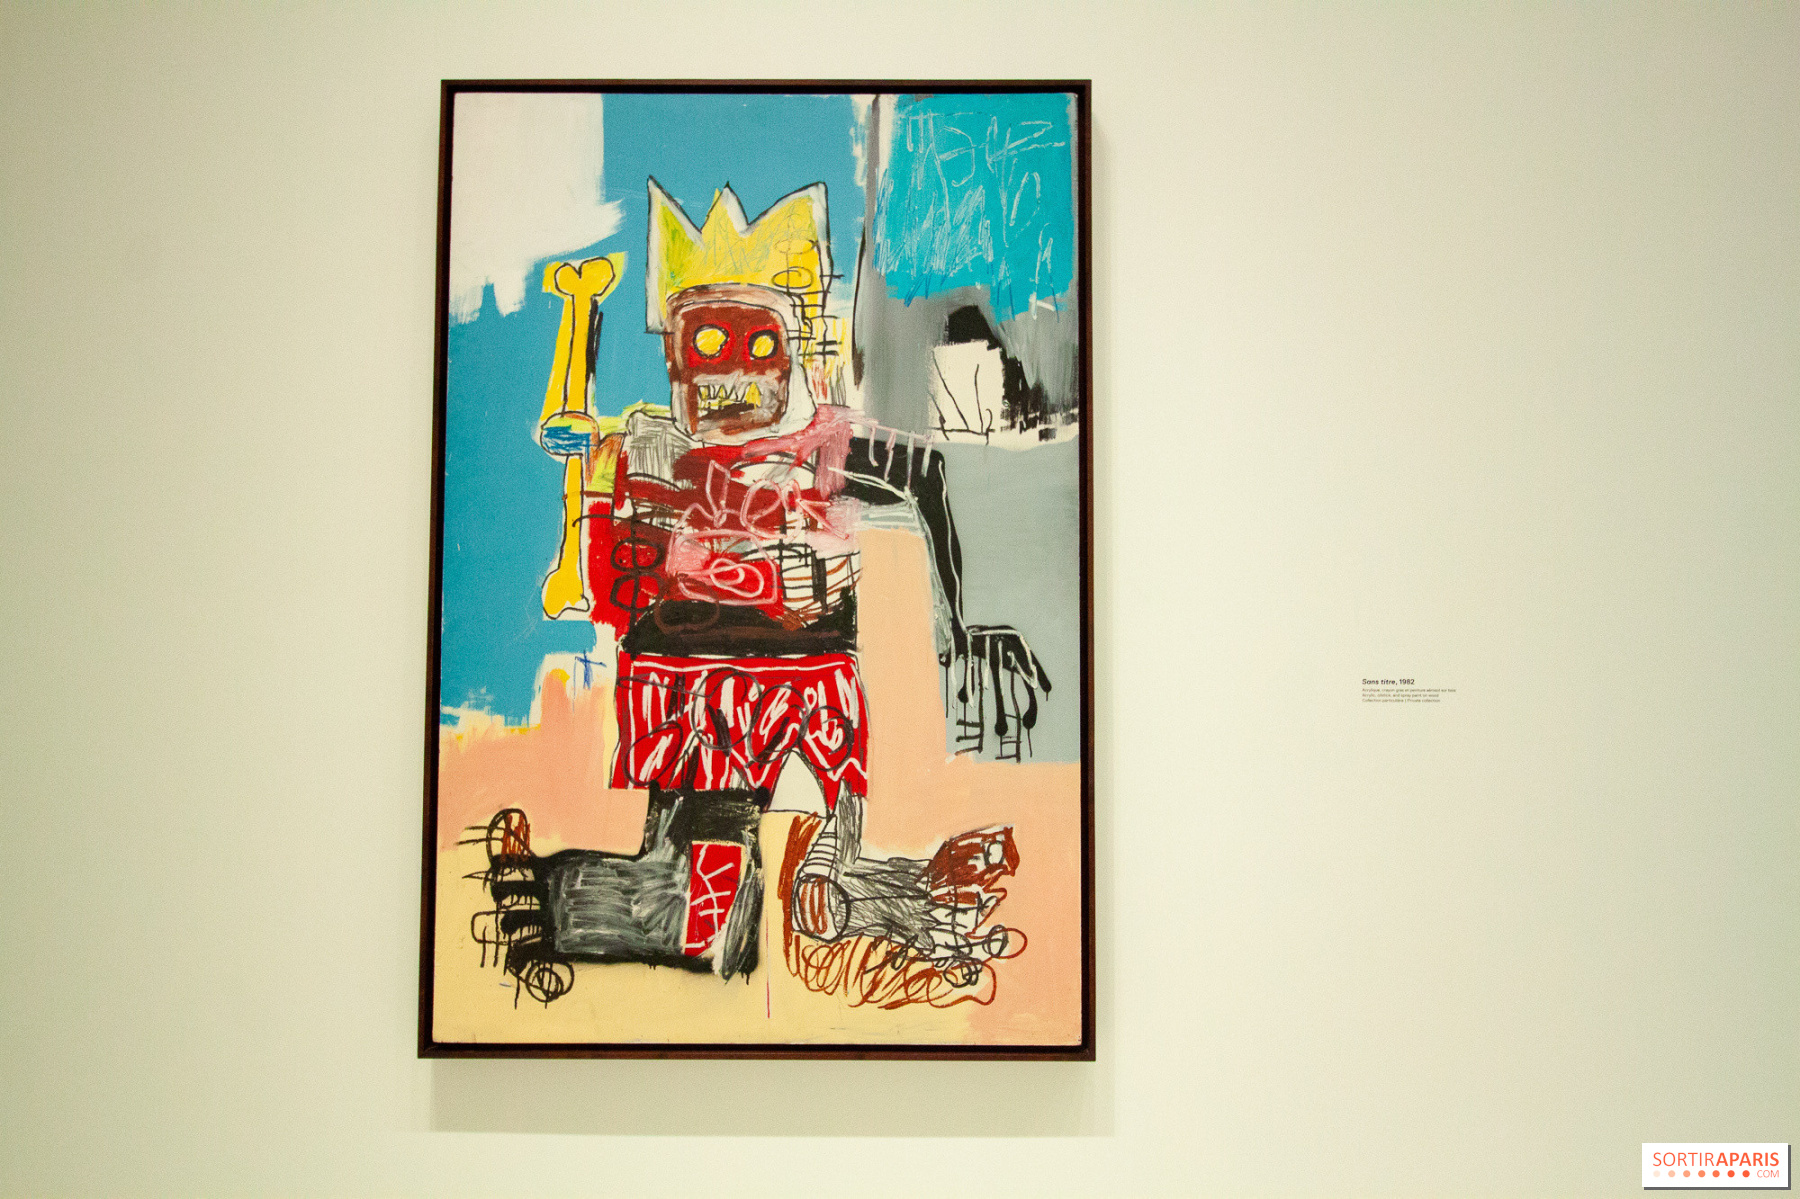 Jean-Michel Basquiat at Fondation Louis Vuitton - The Brant Foundation